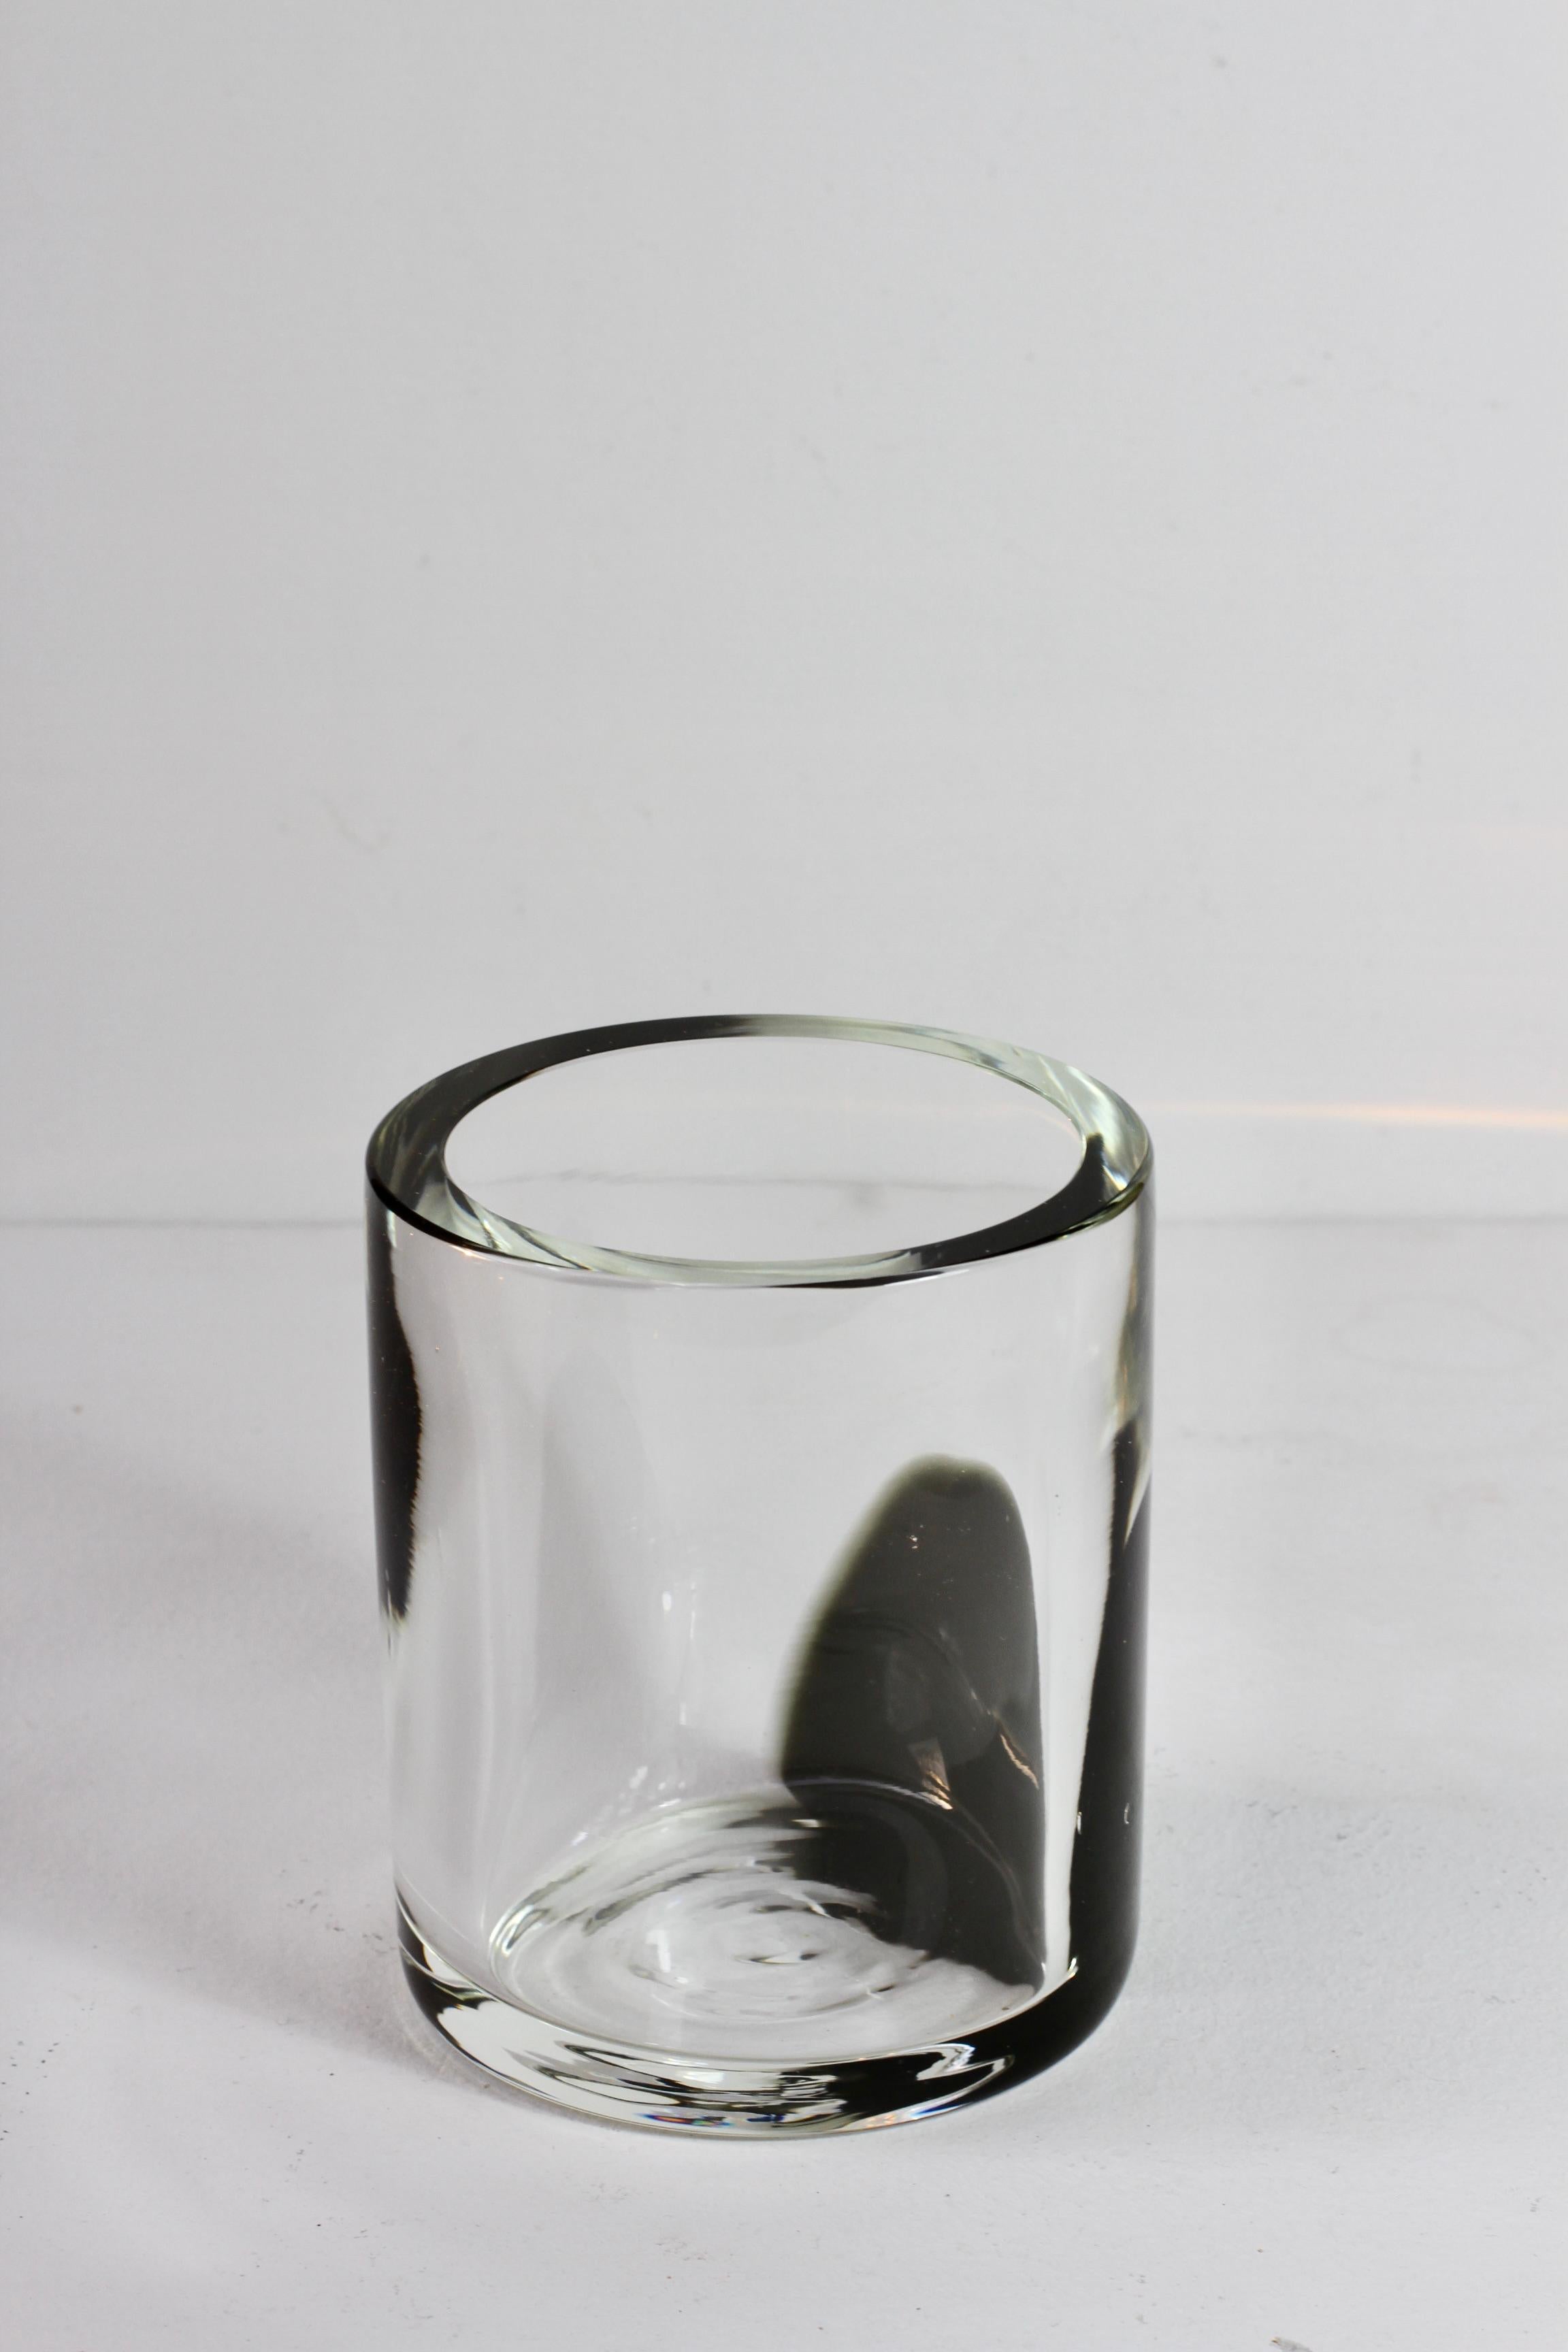 Antonio Da Ros for Cenedese 1970s Italian Round Black & Clear Murano Glass Vase For Sale 5